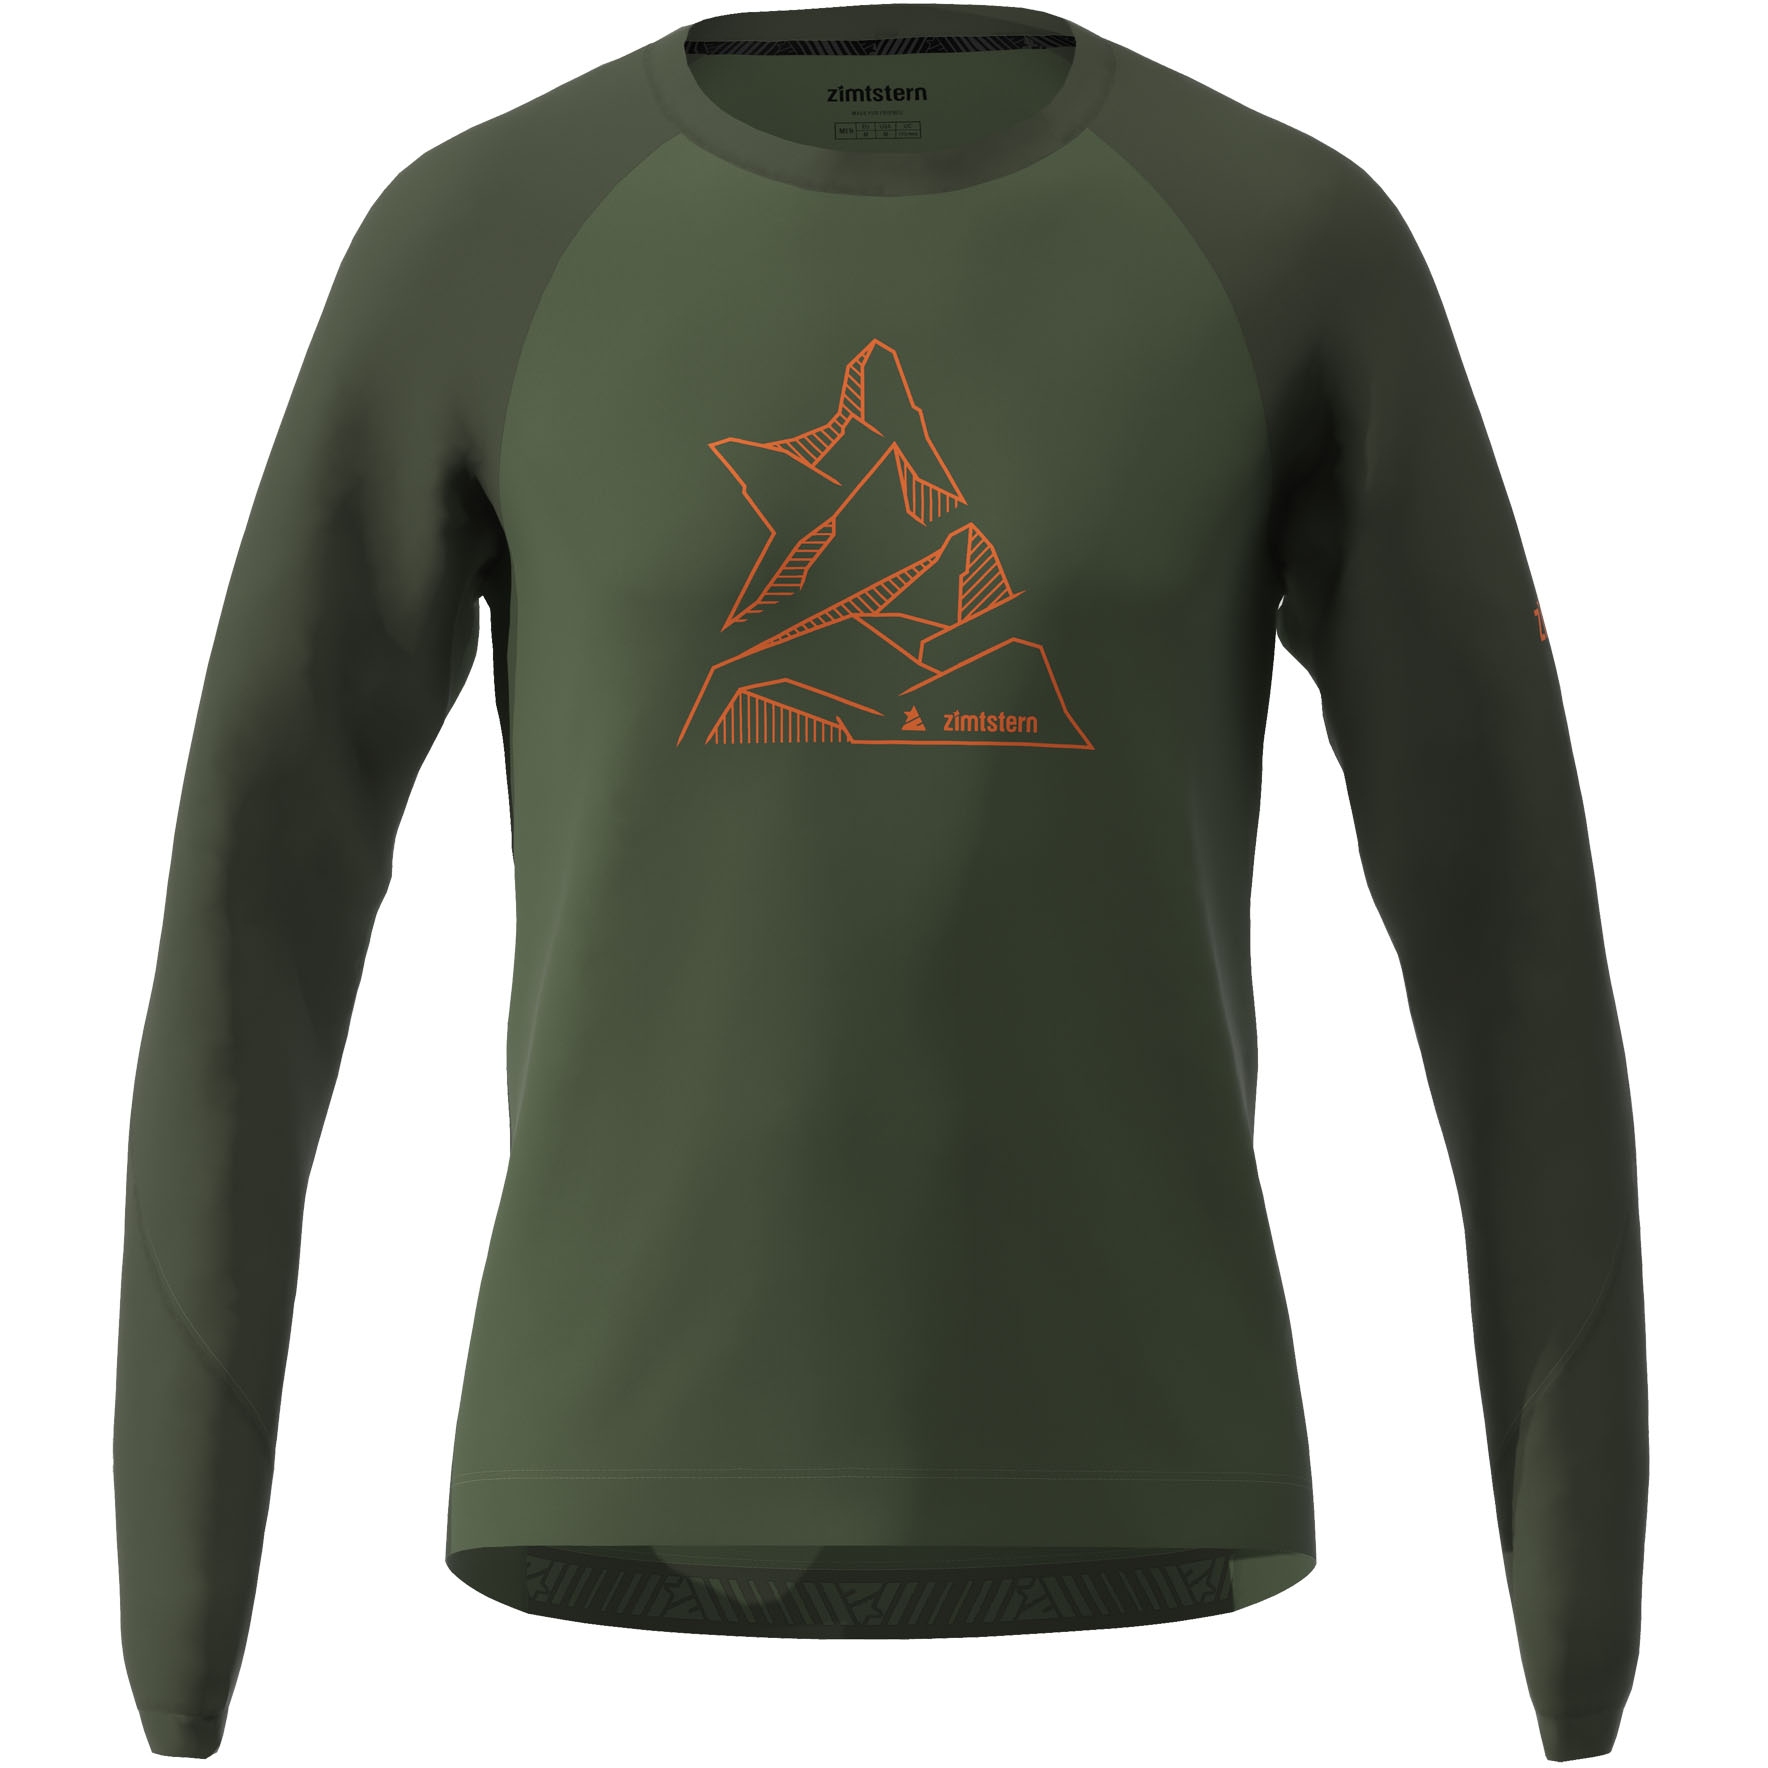 Productfoto van Zimtstern PureFlowz Long Sleeve Shirt M10033 - bronze green/forest night